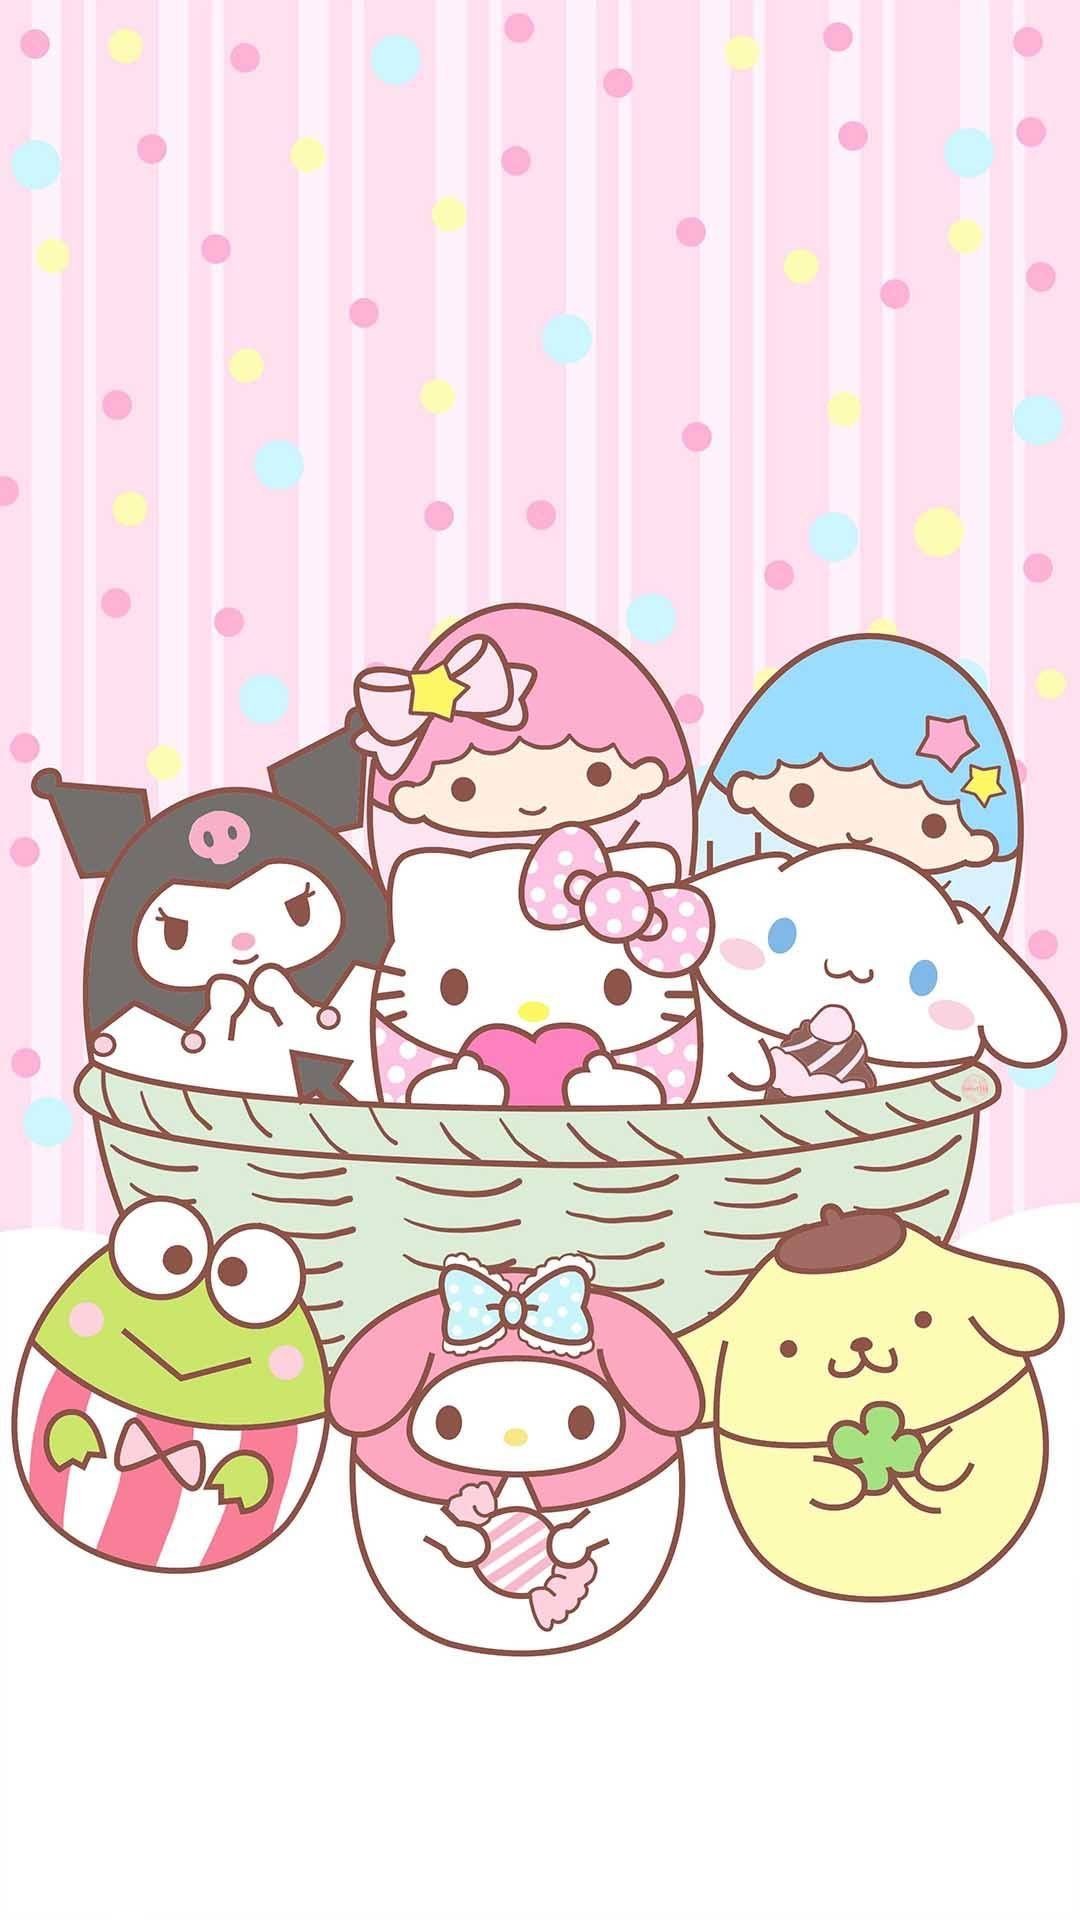 Free download 1080x1920 Sanrio Wallpaper Kawaii Wallpaper Hello Cute